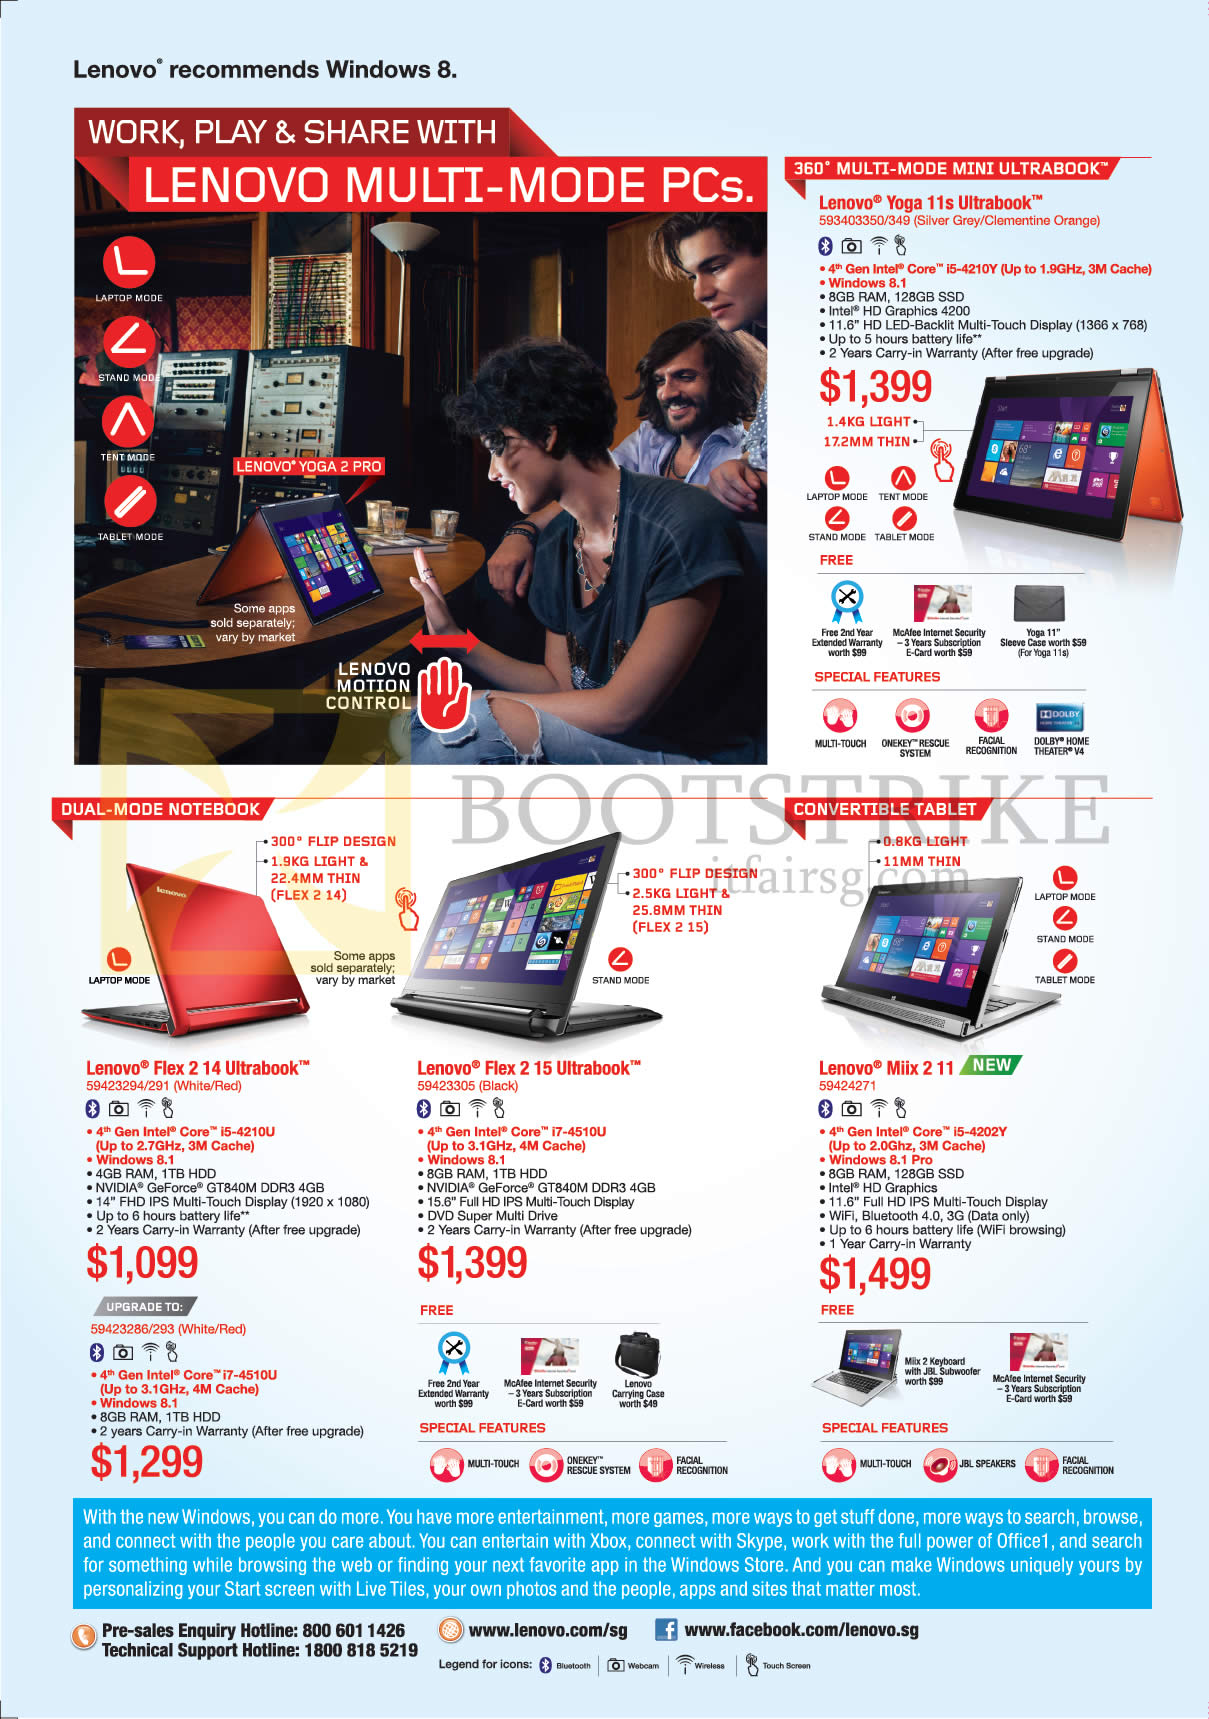 PC SHOW 2014 price list image brochure of Lenovo Notebooks Yoga 11s Ultrabook, Flex 2 14, Flex 2 15, Miix 2 11 Tablet